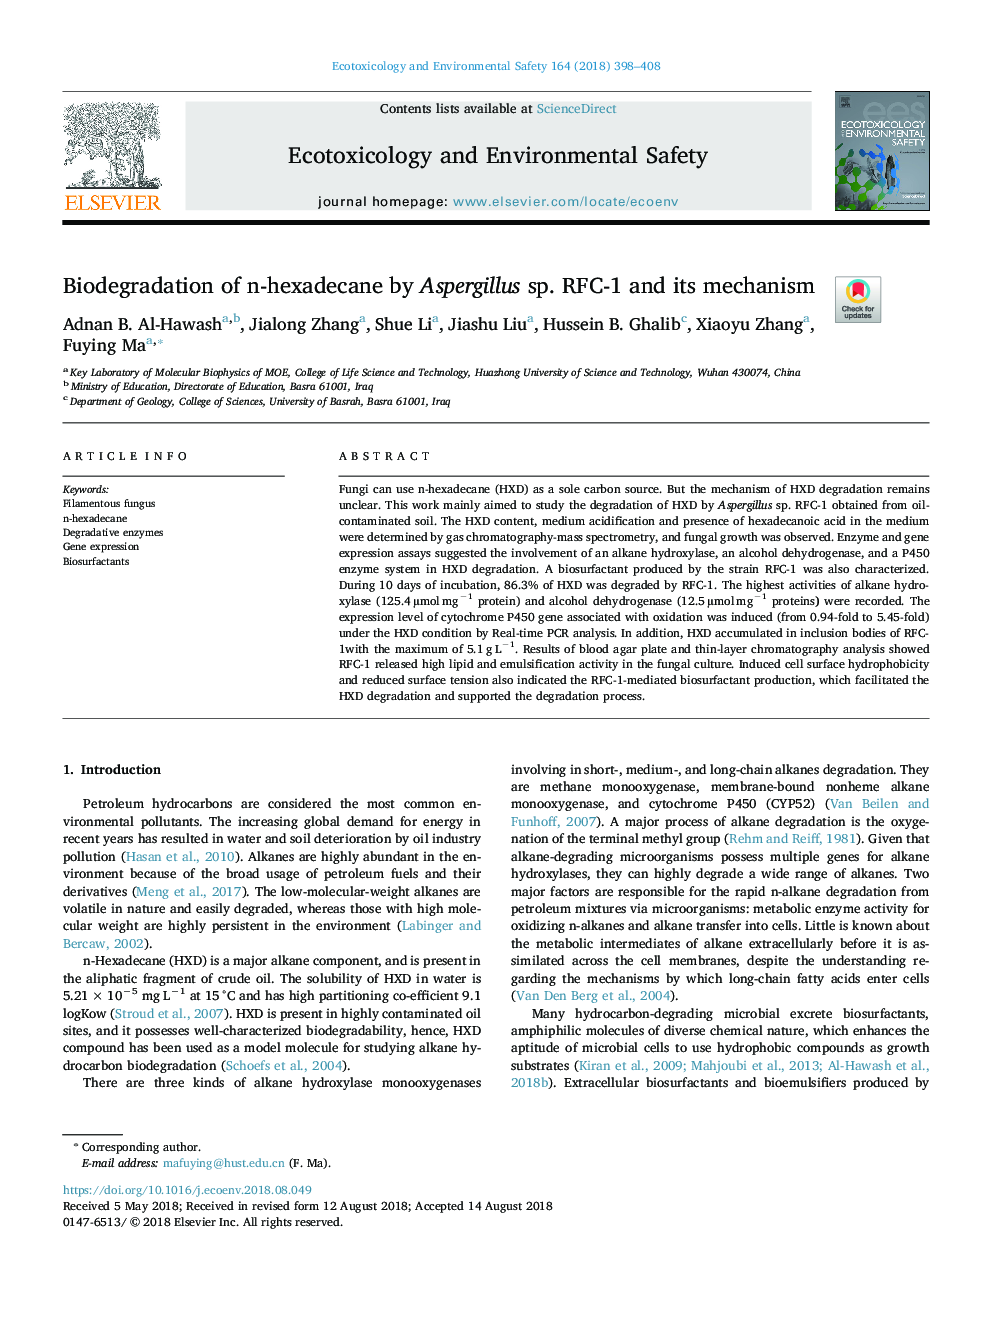 Biodegradation of n-hexadecane by Aspergillus sp. RFC-1 and its mechanism